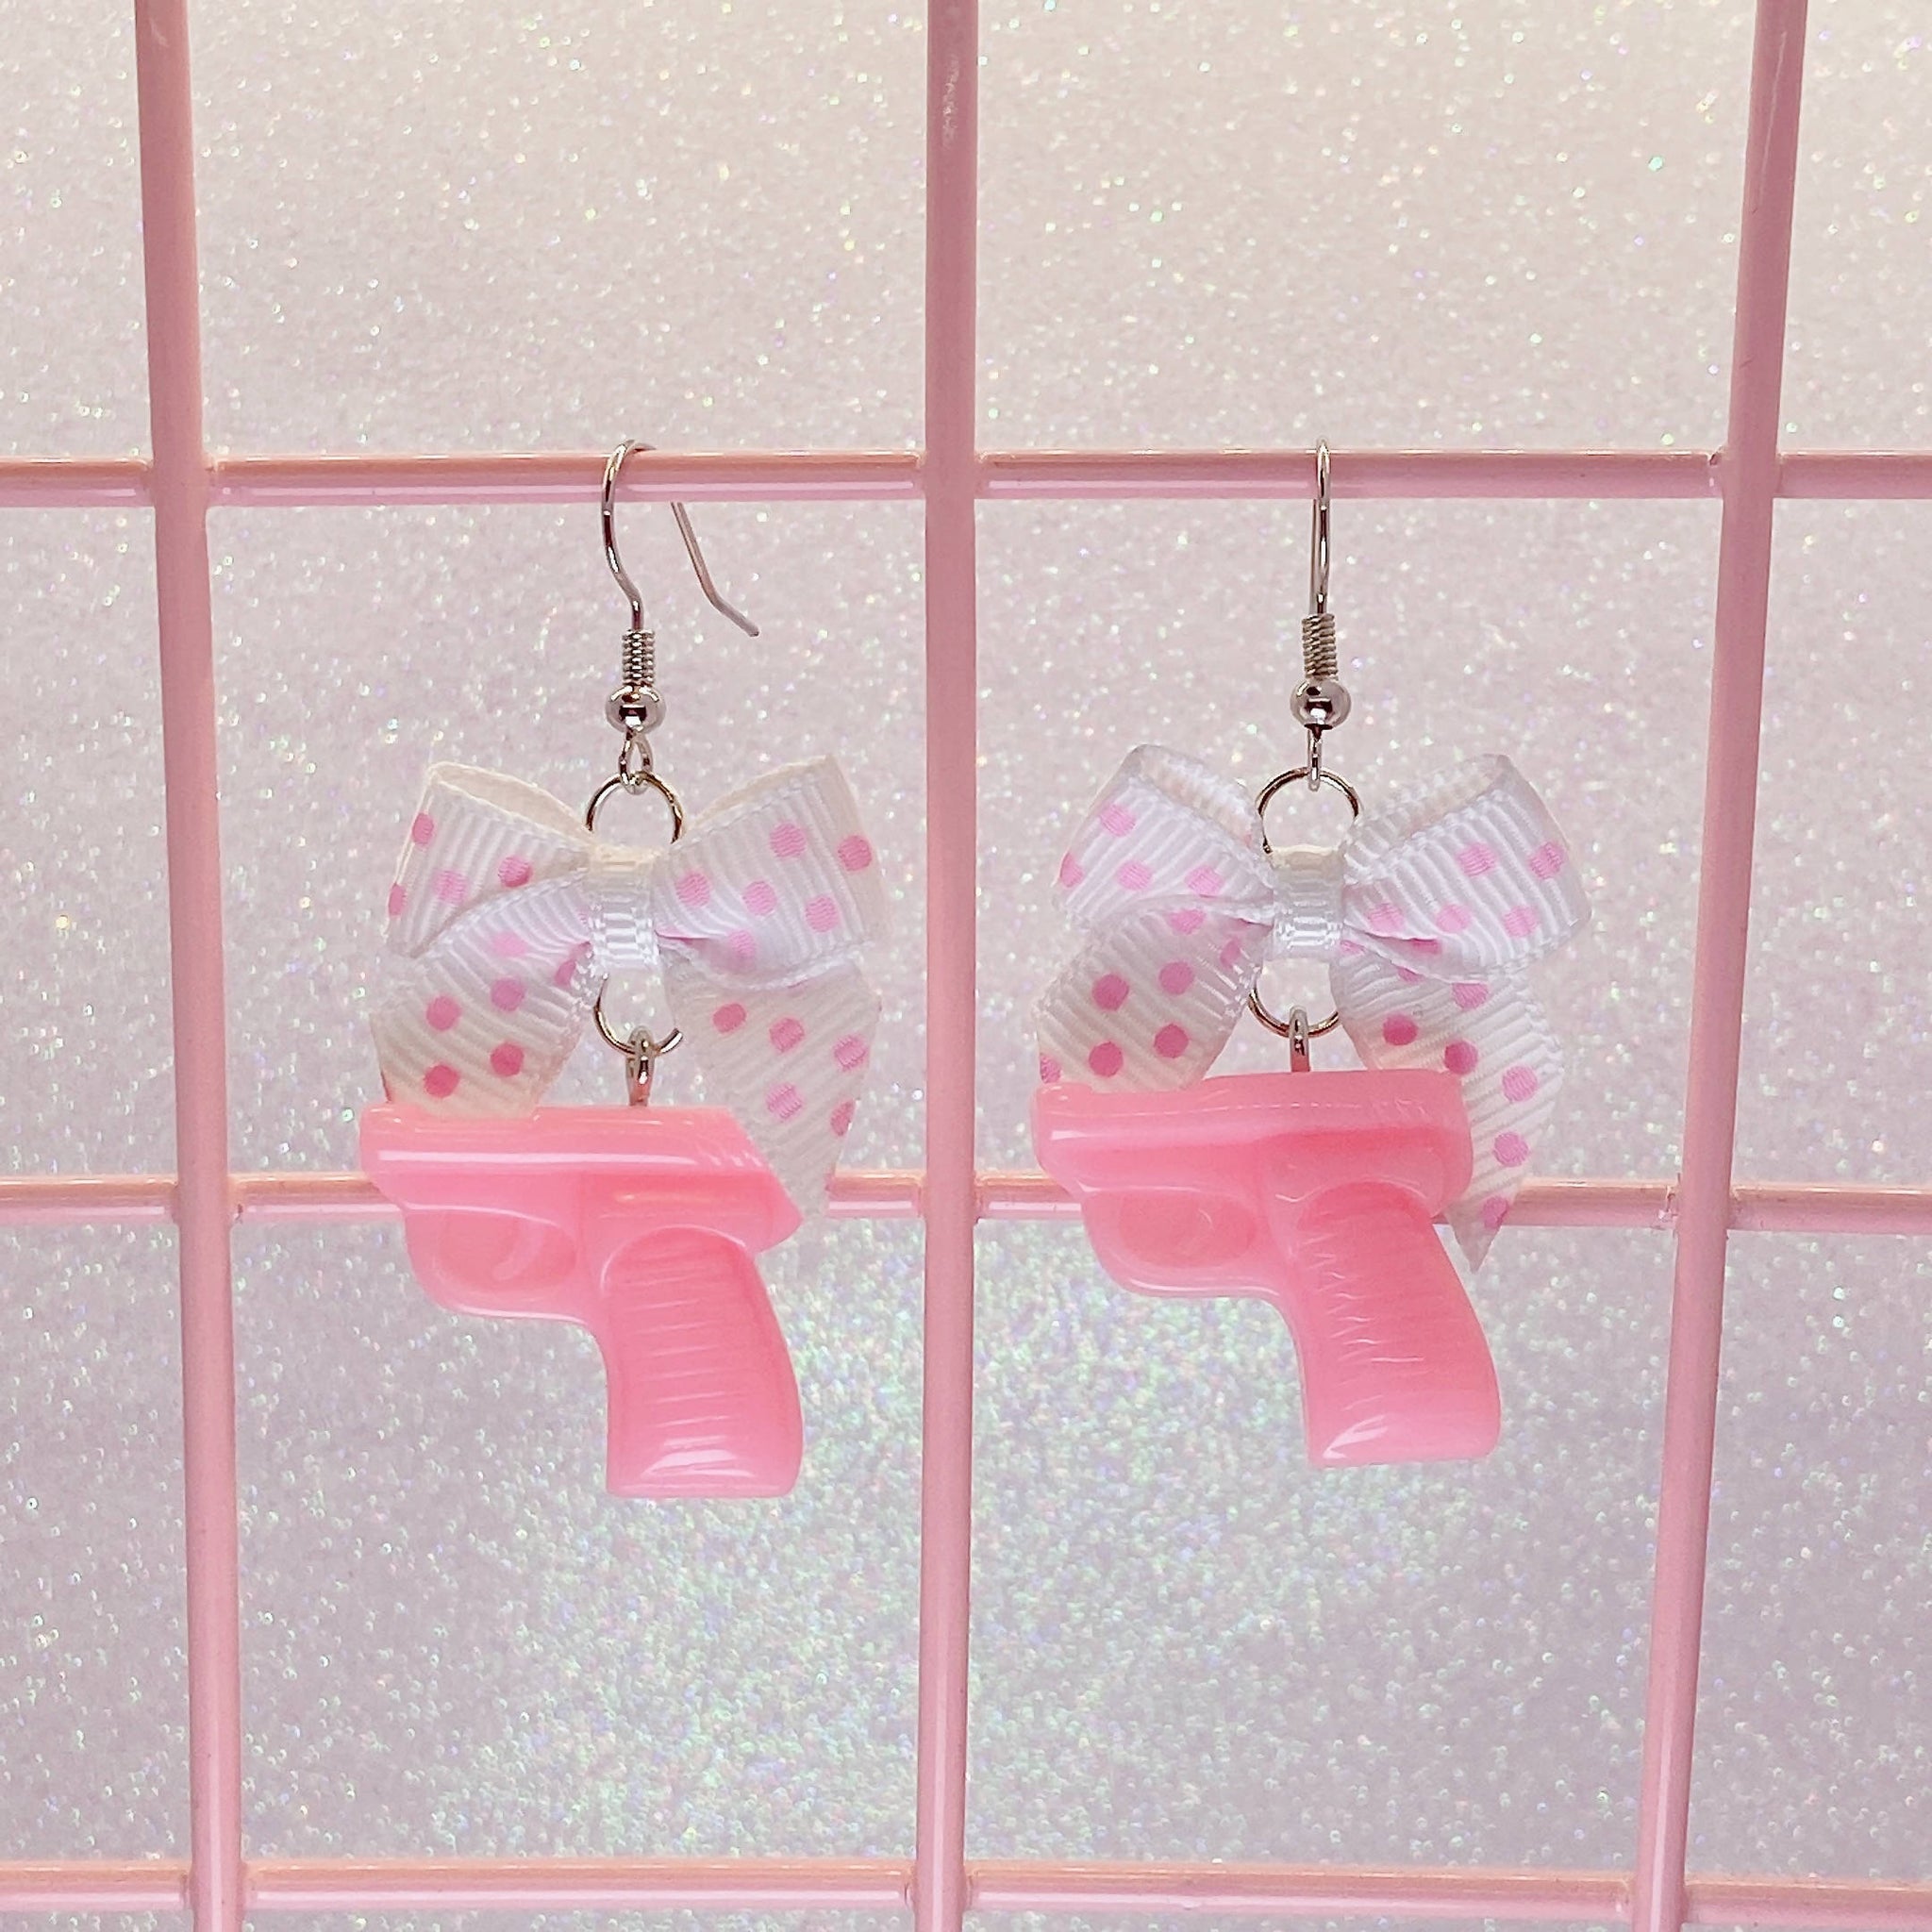 Water Gun Earrings (3 Colors) - Lolita Collective